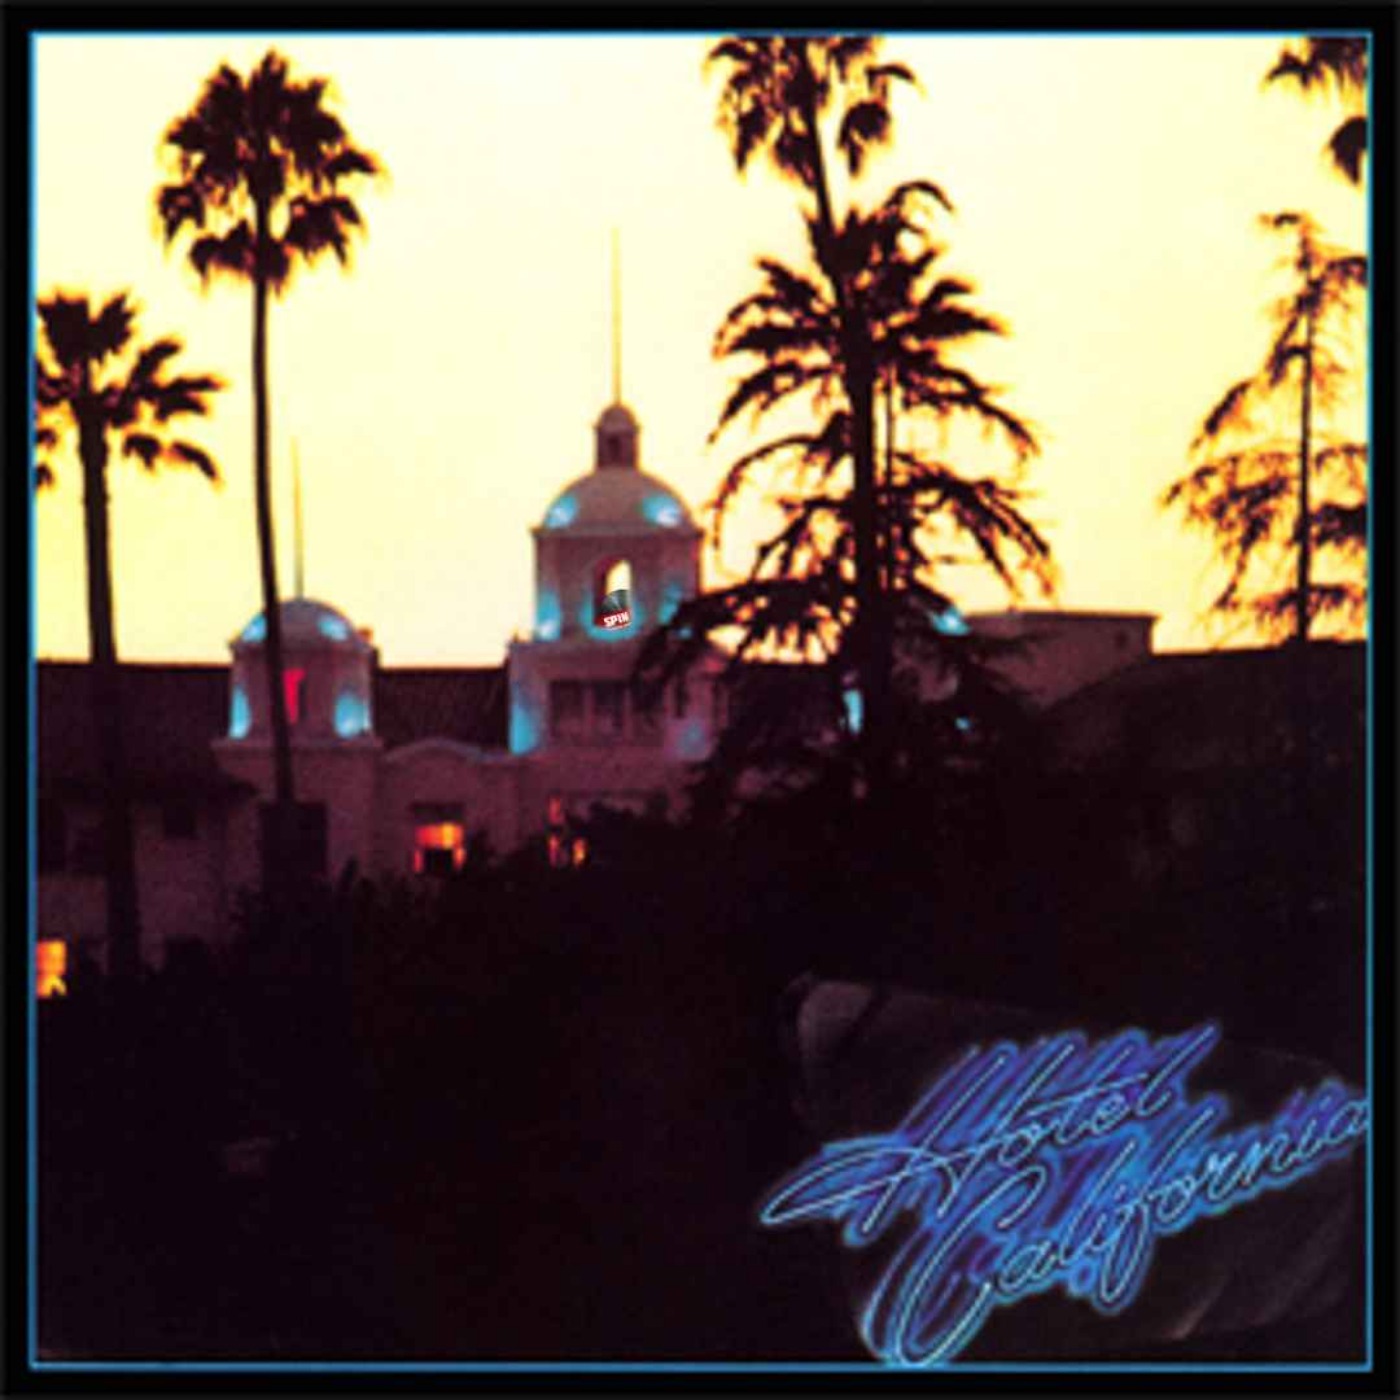 Hotel California - Eagles: Episode 85